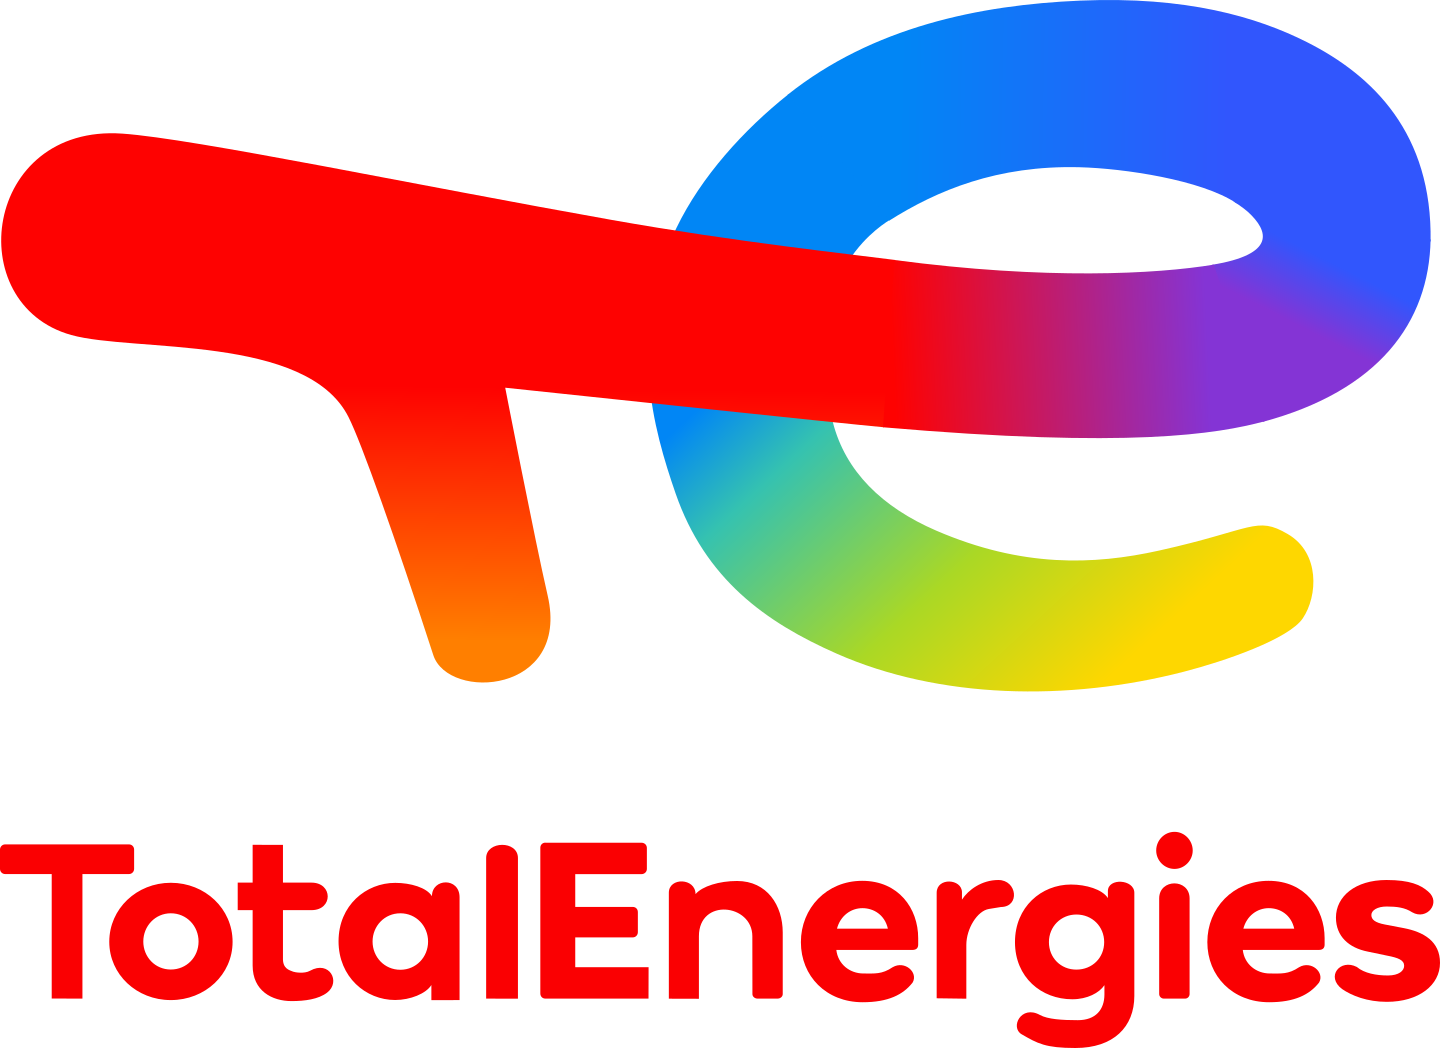 totalenergies logo 3 - TotalEnergies Logo